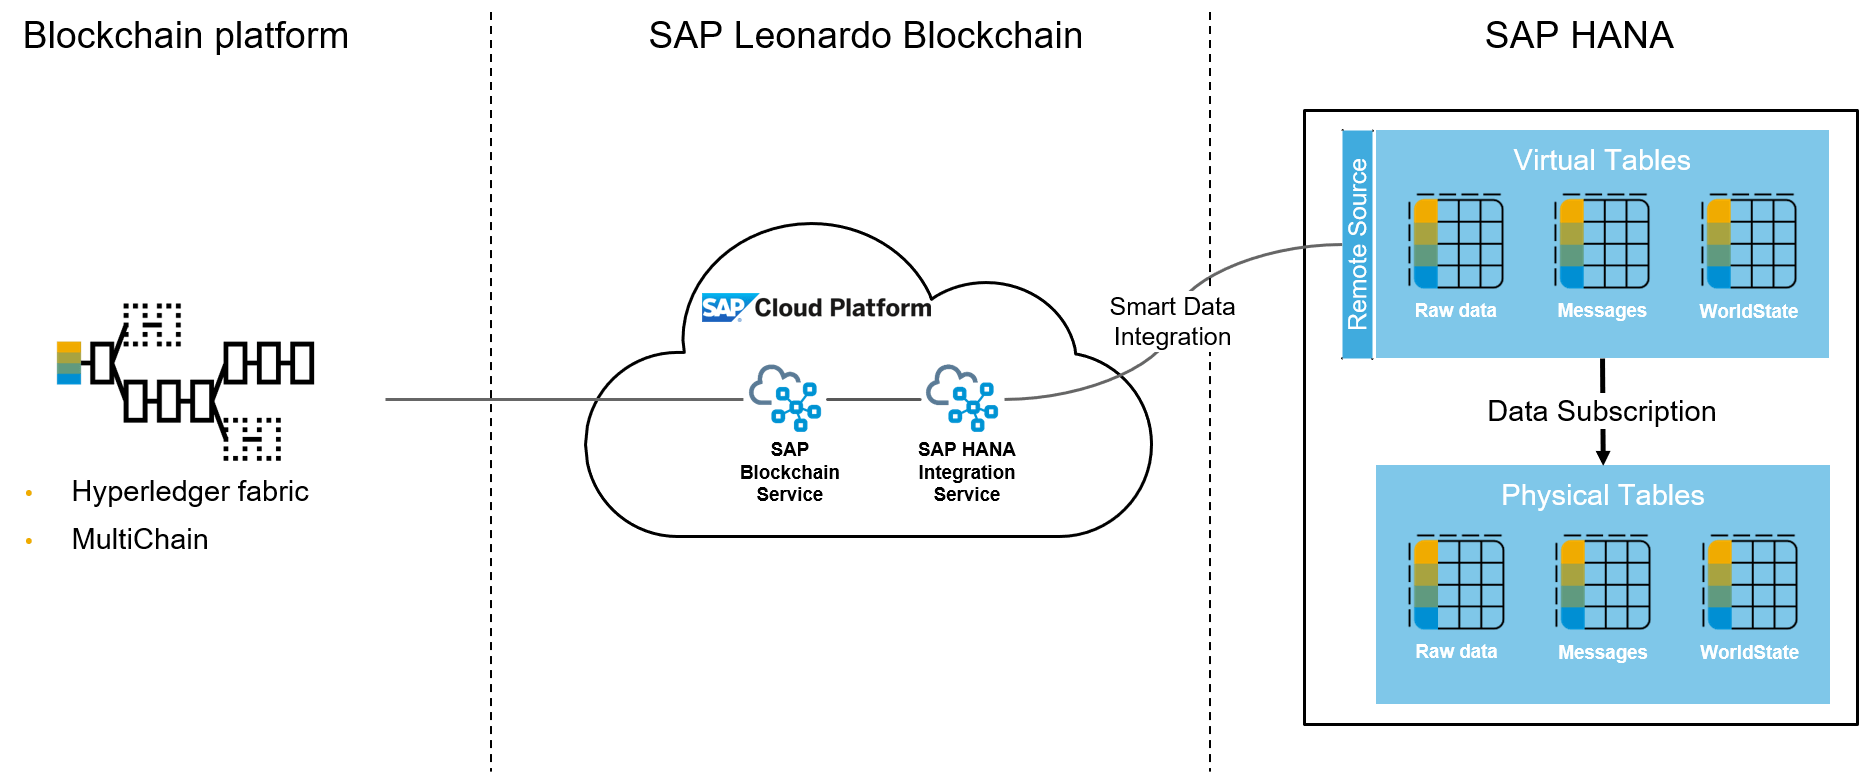 SAP Blockchain Logo - SAP HANA Blockchain: An introduction | SAP Blogs